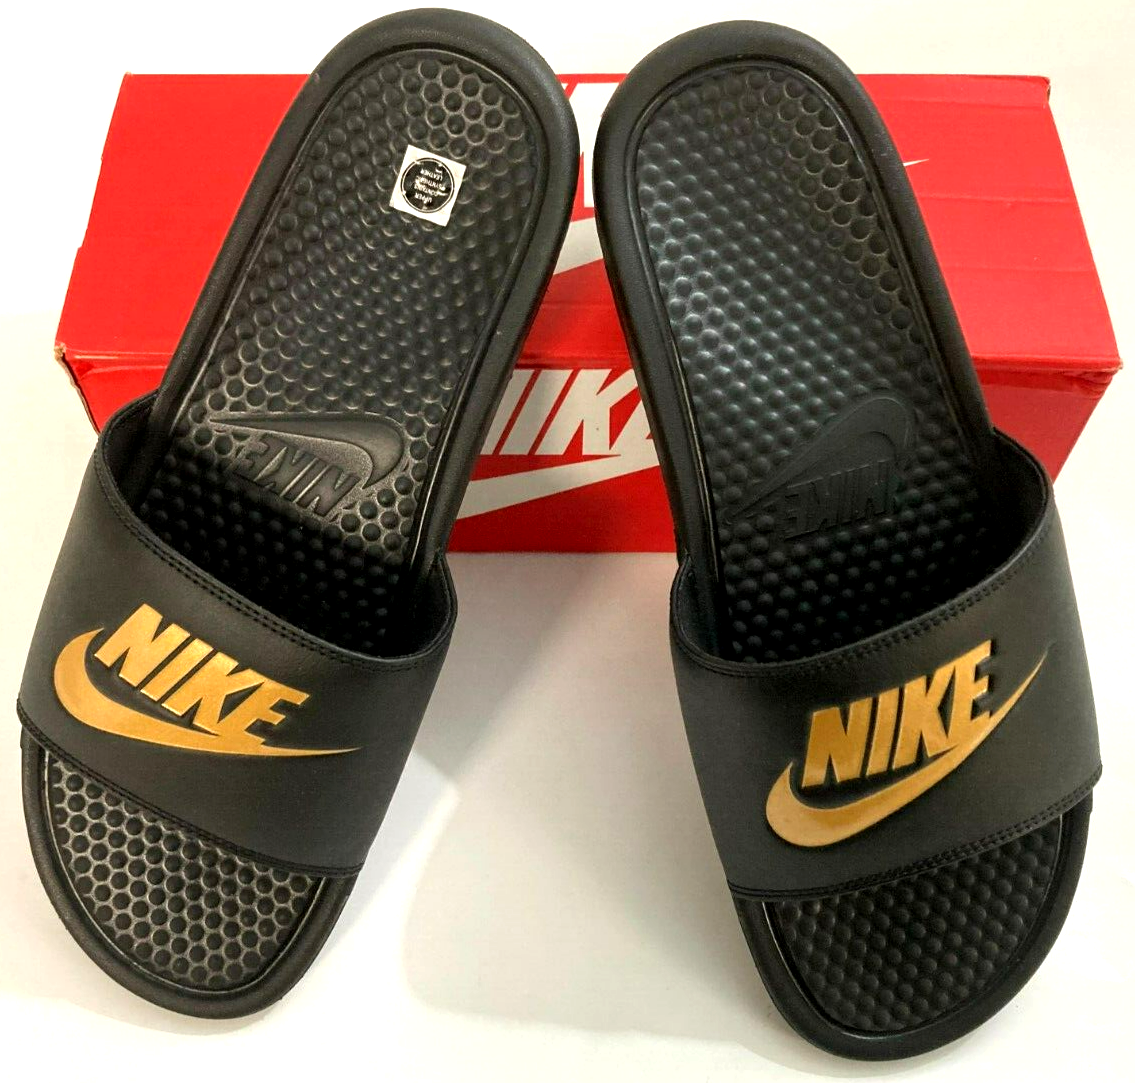 Nike Benassi JDI Slippers Sandals Size 10 for sale online | eBay